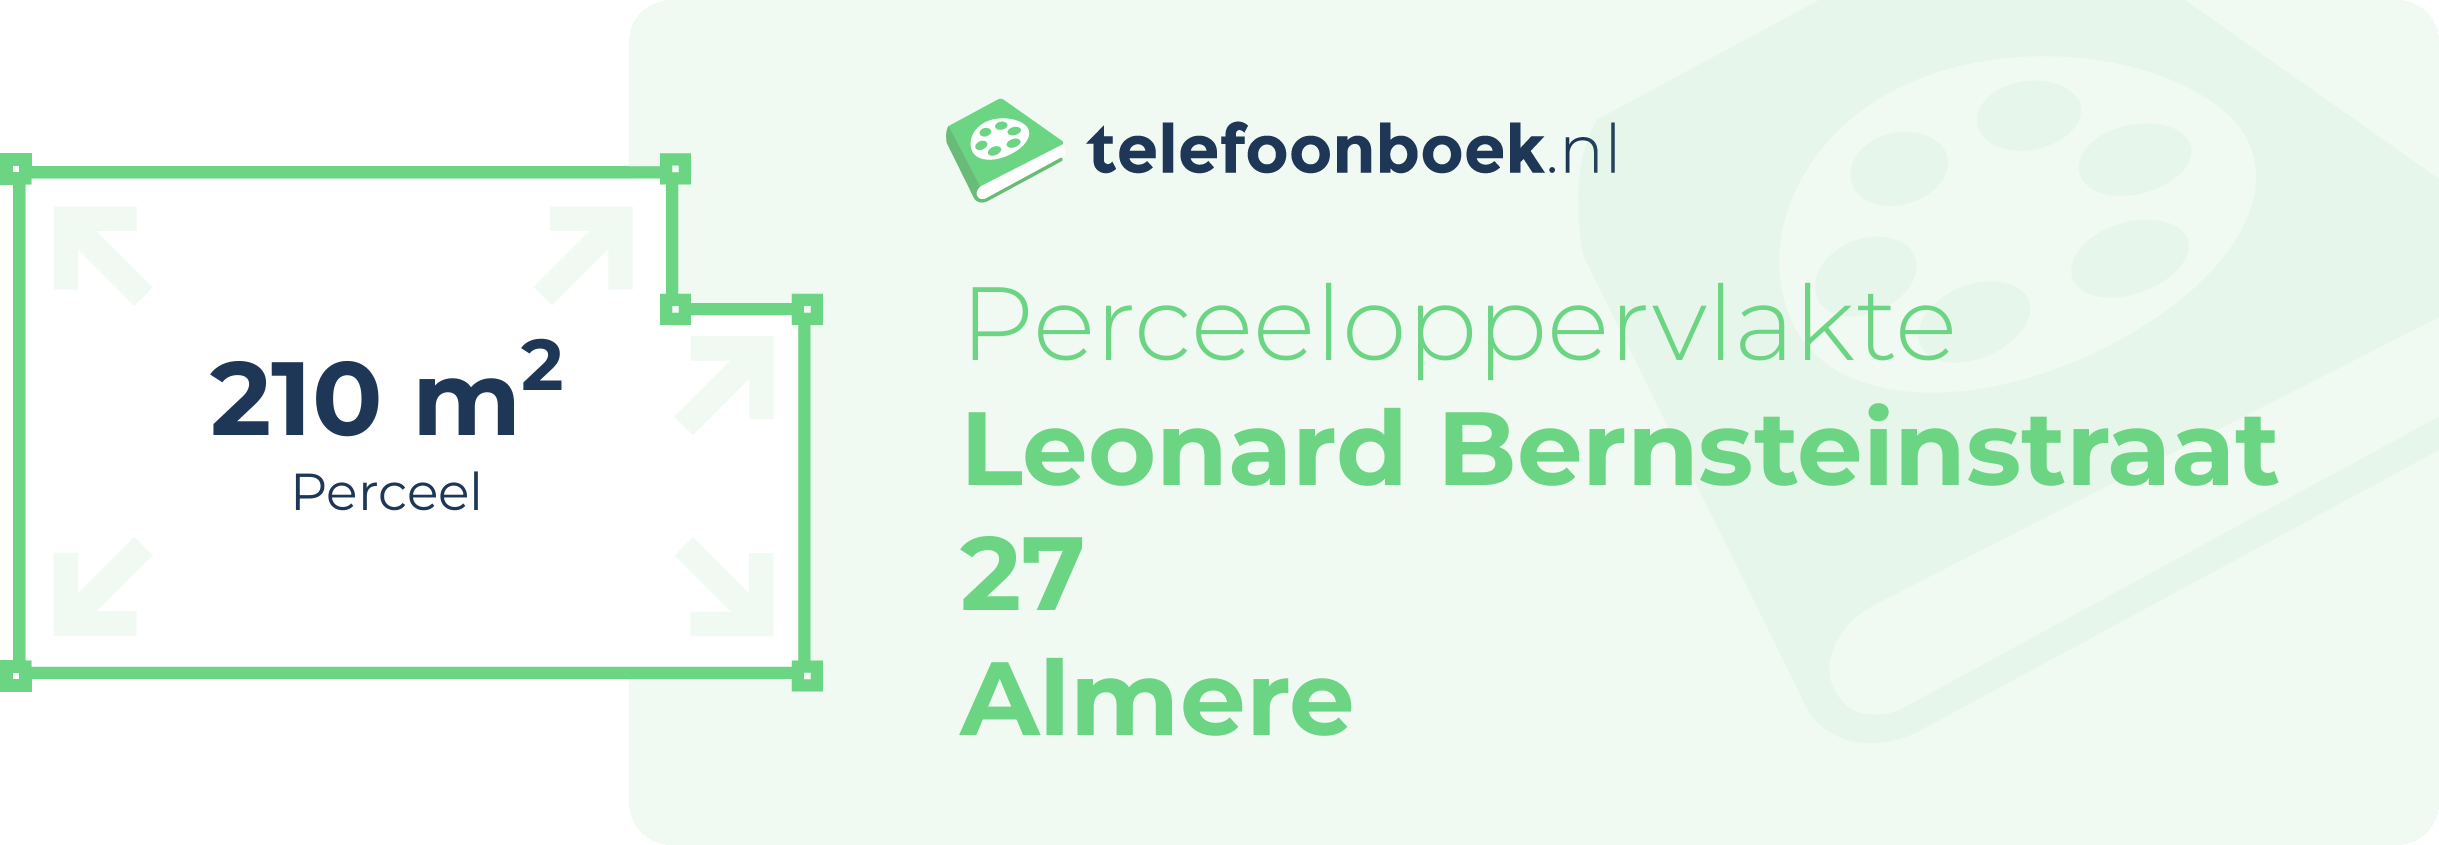 Perceeloppervlakte Leonard Bernsteinstraat 27 Almere